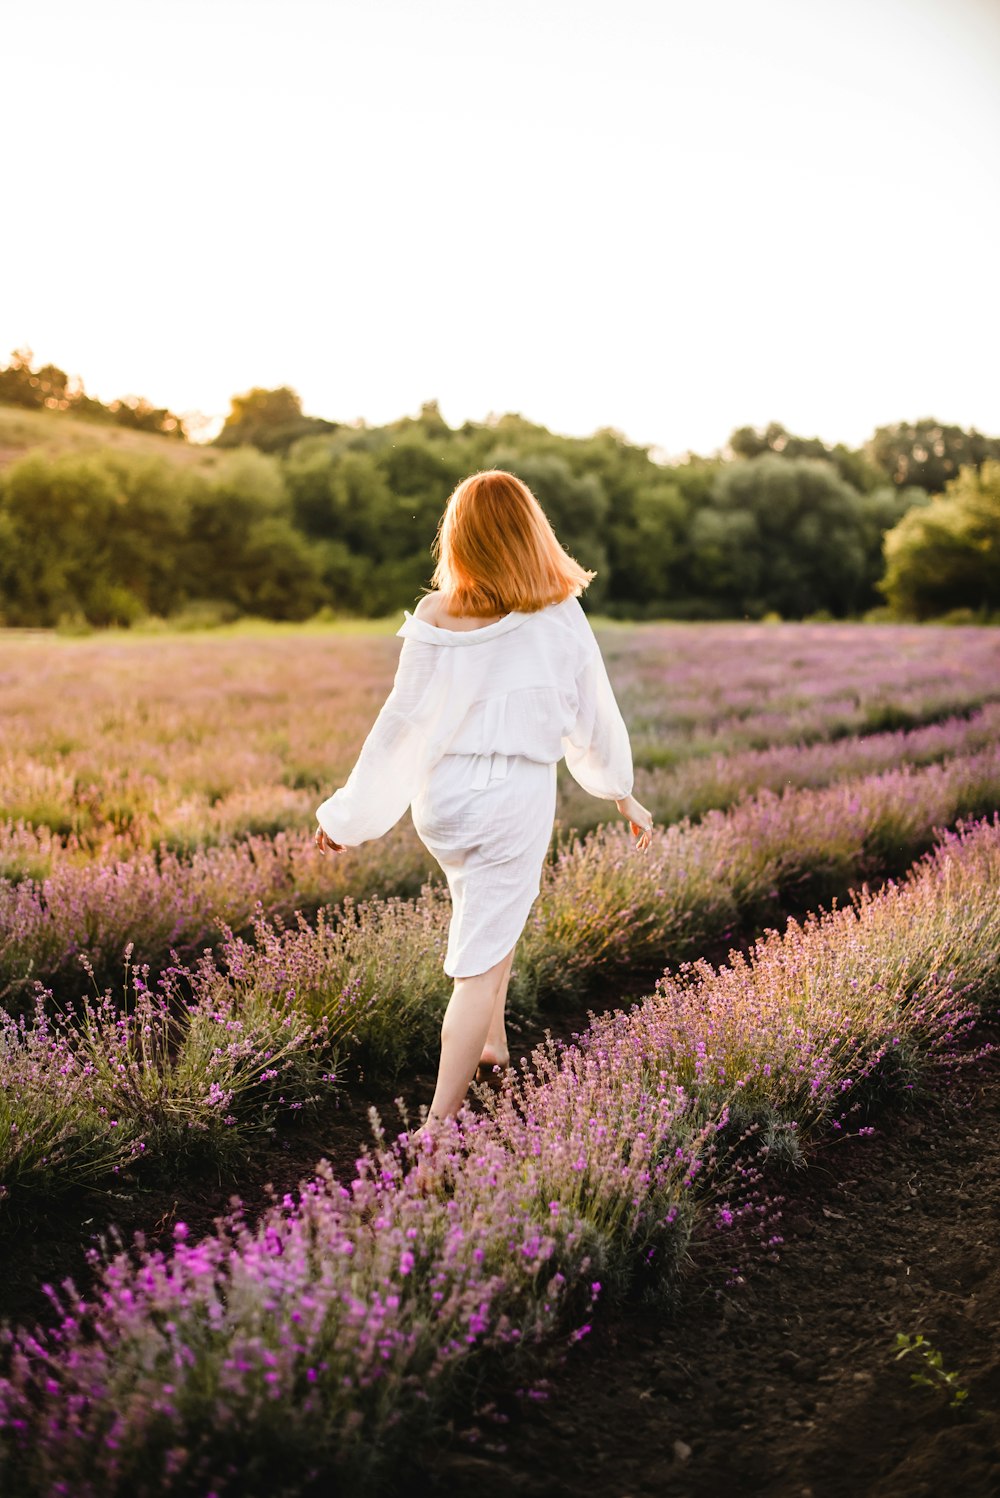 woman in white long sleeve shirt walking on purple flower field during daytime